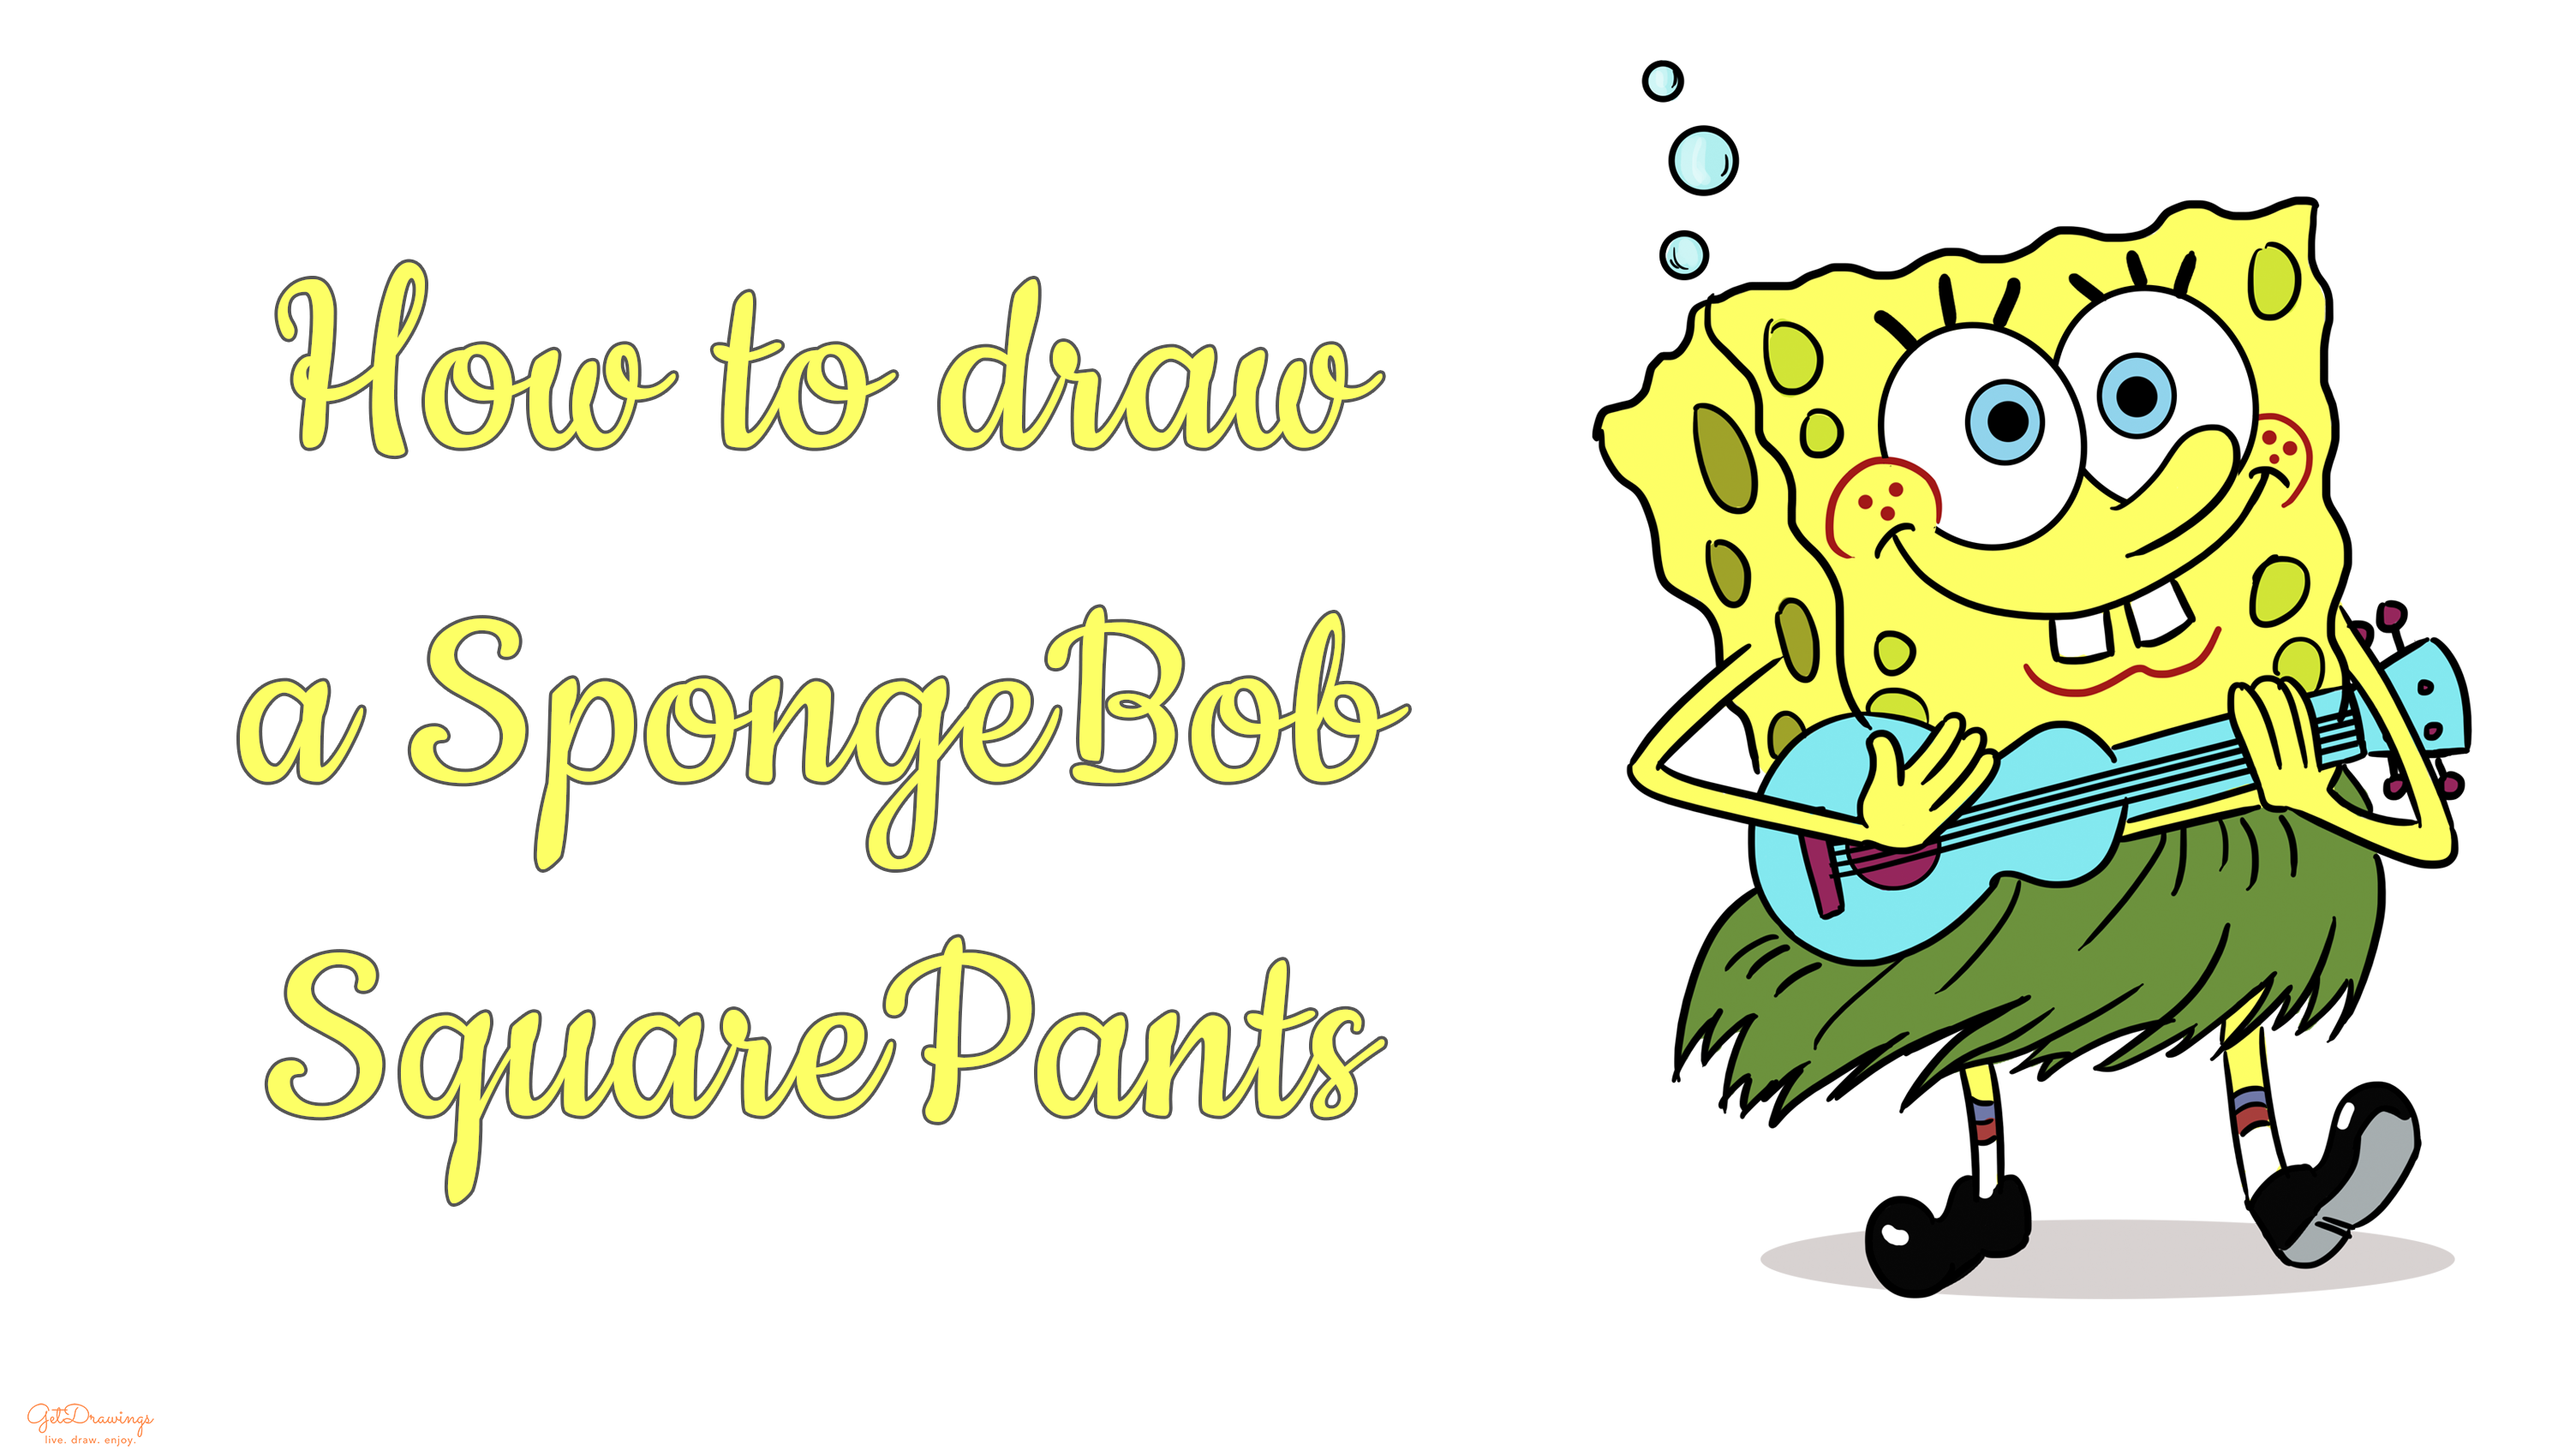 How to draw a SpongeBob SquarePants?